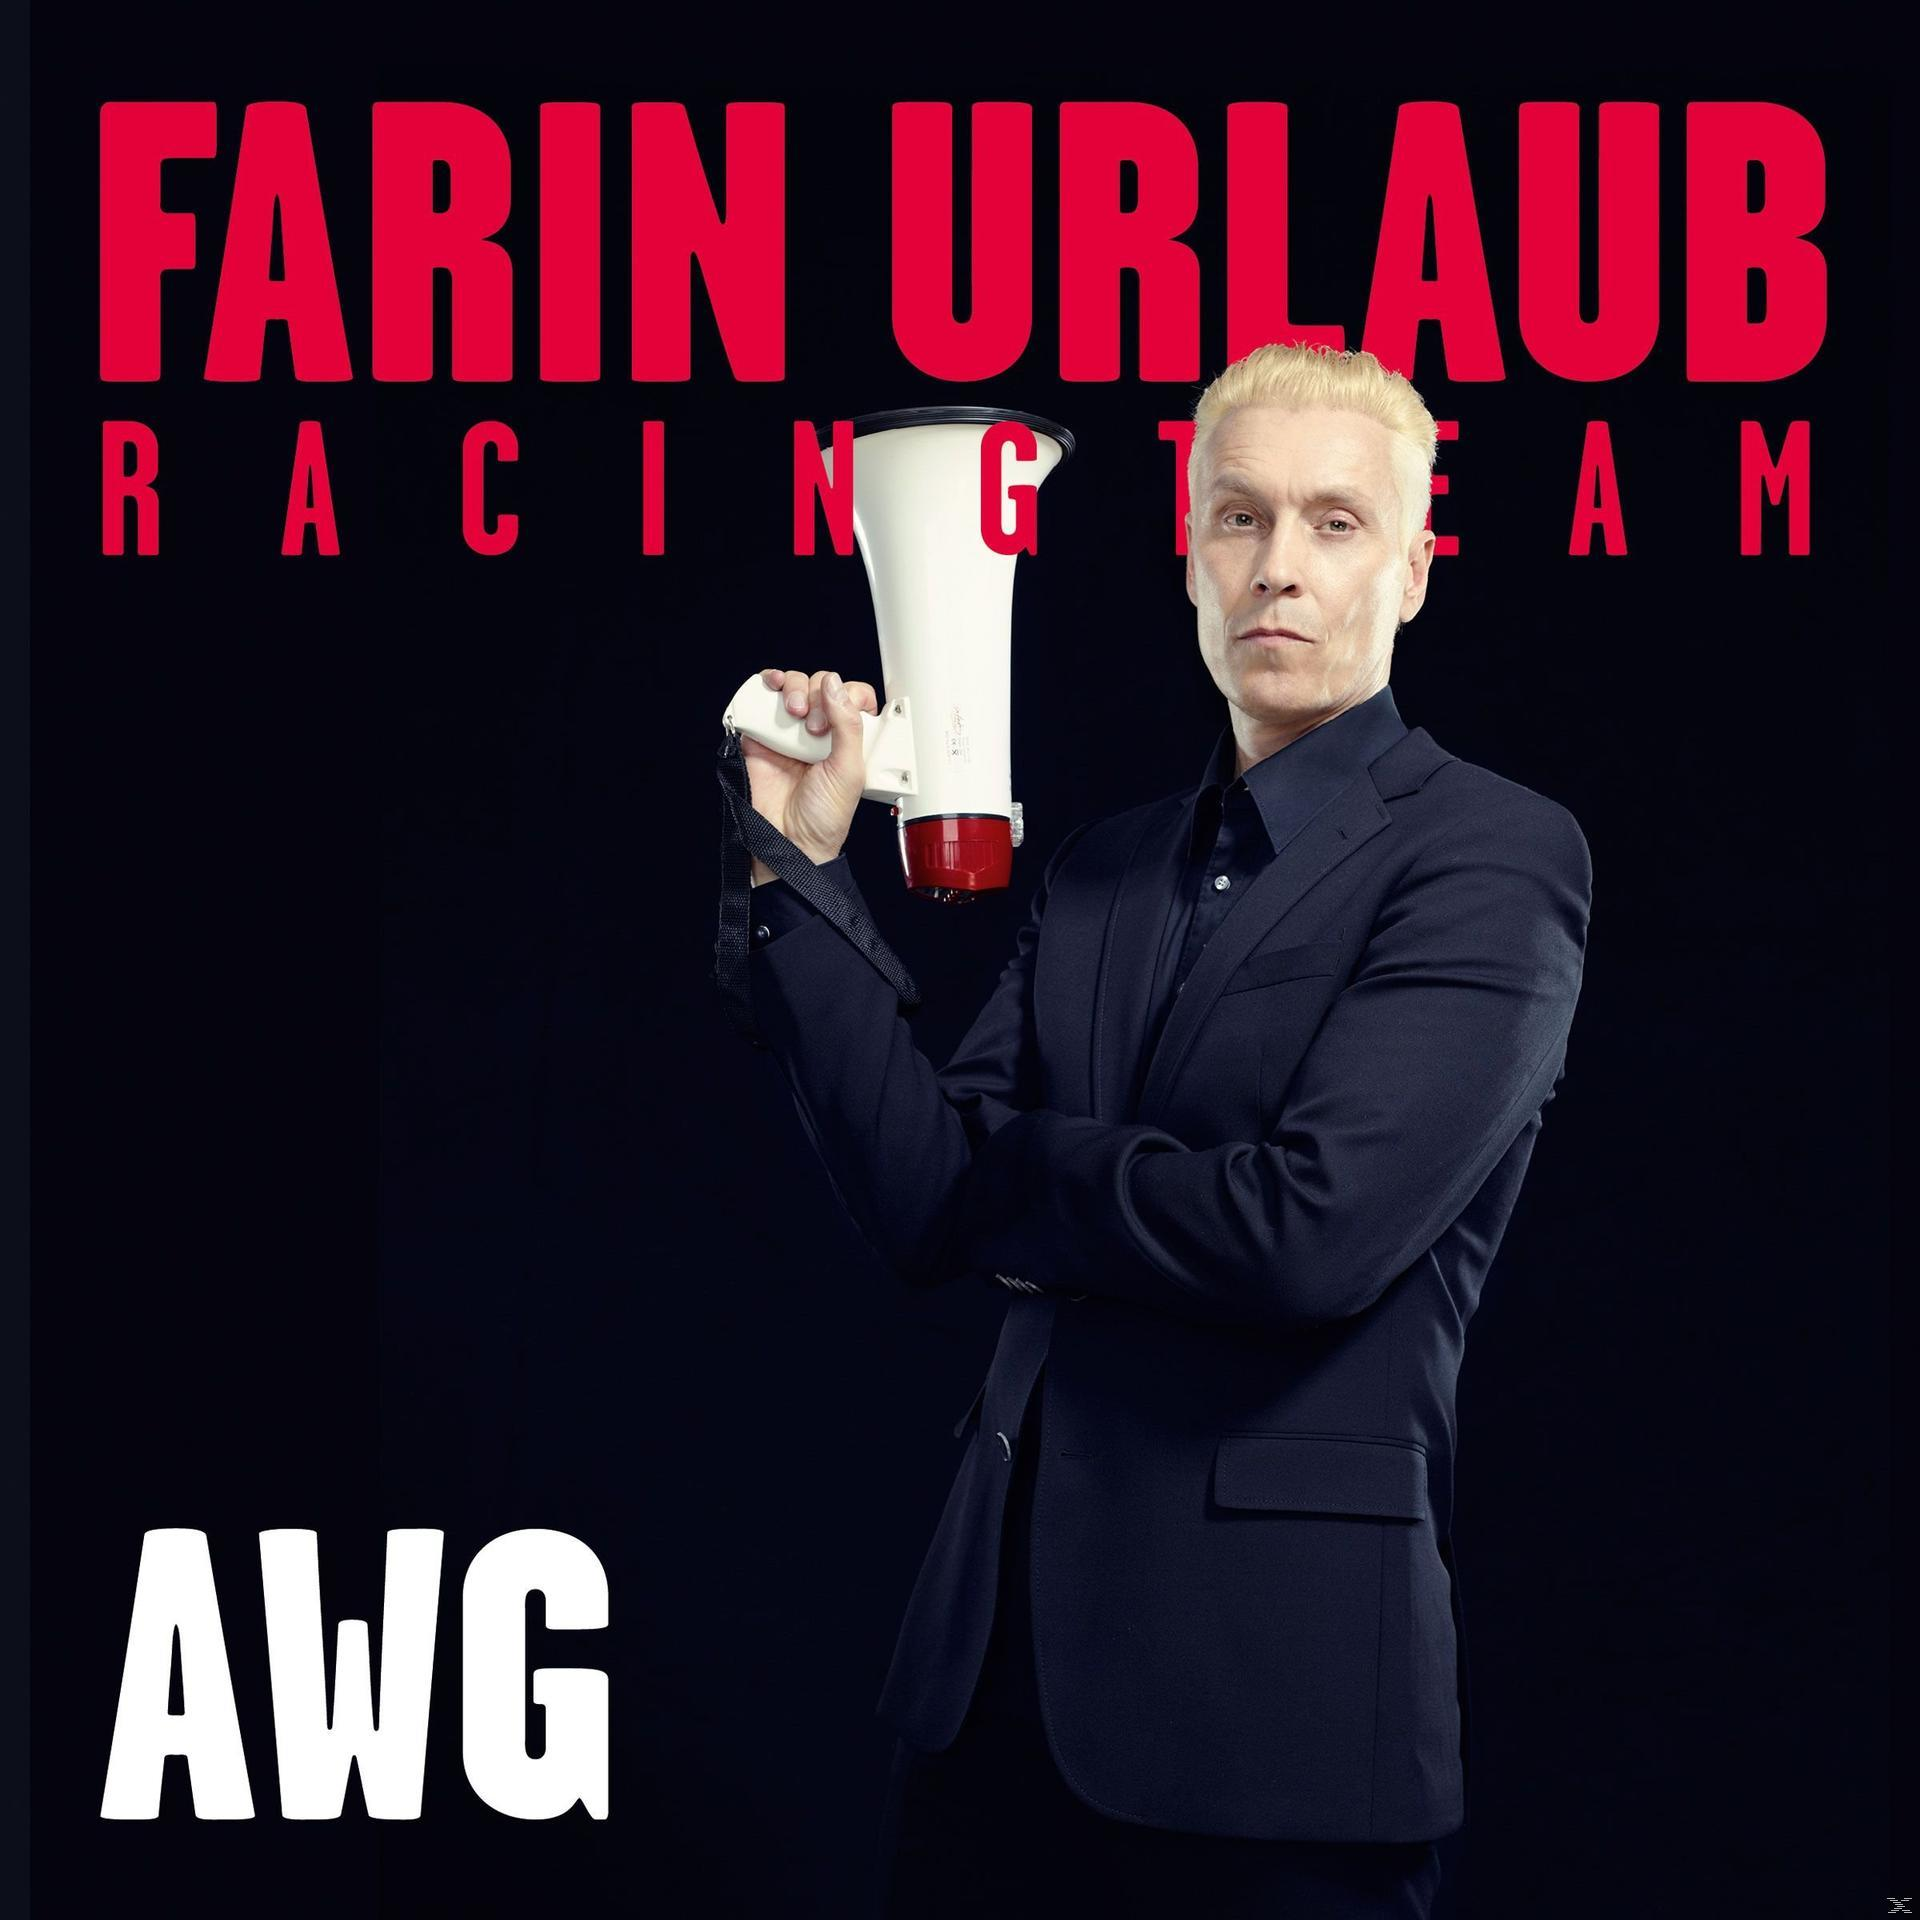 - Farin (Vinyl) Urlaub Awg Team (Ltd.7inch Vinyl) Racing -